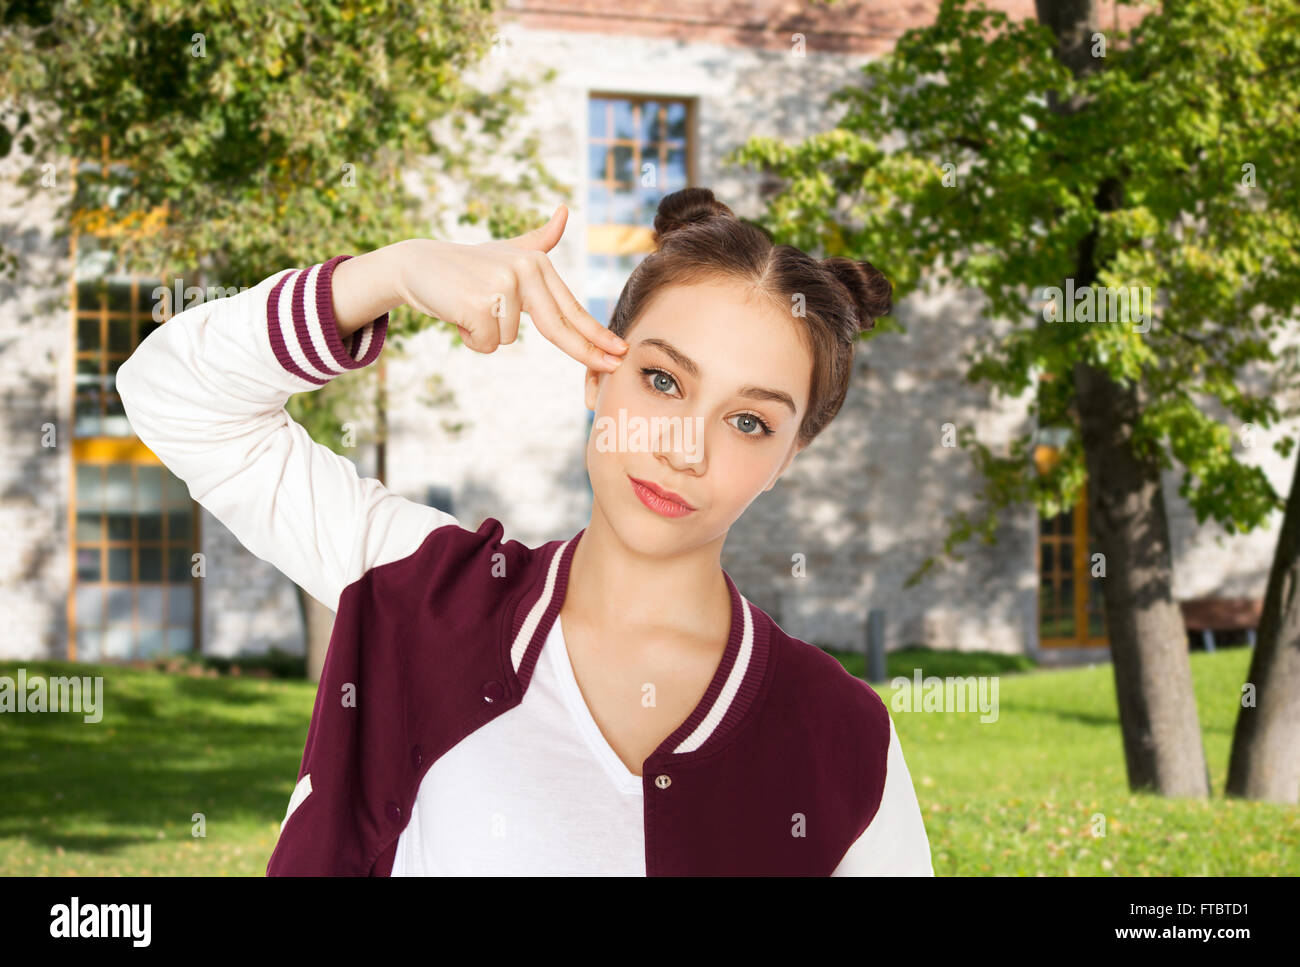 bored teenage girl making finger gun gesture Stock Photo